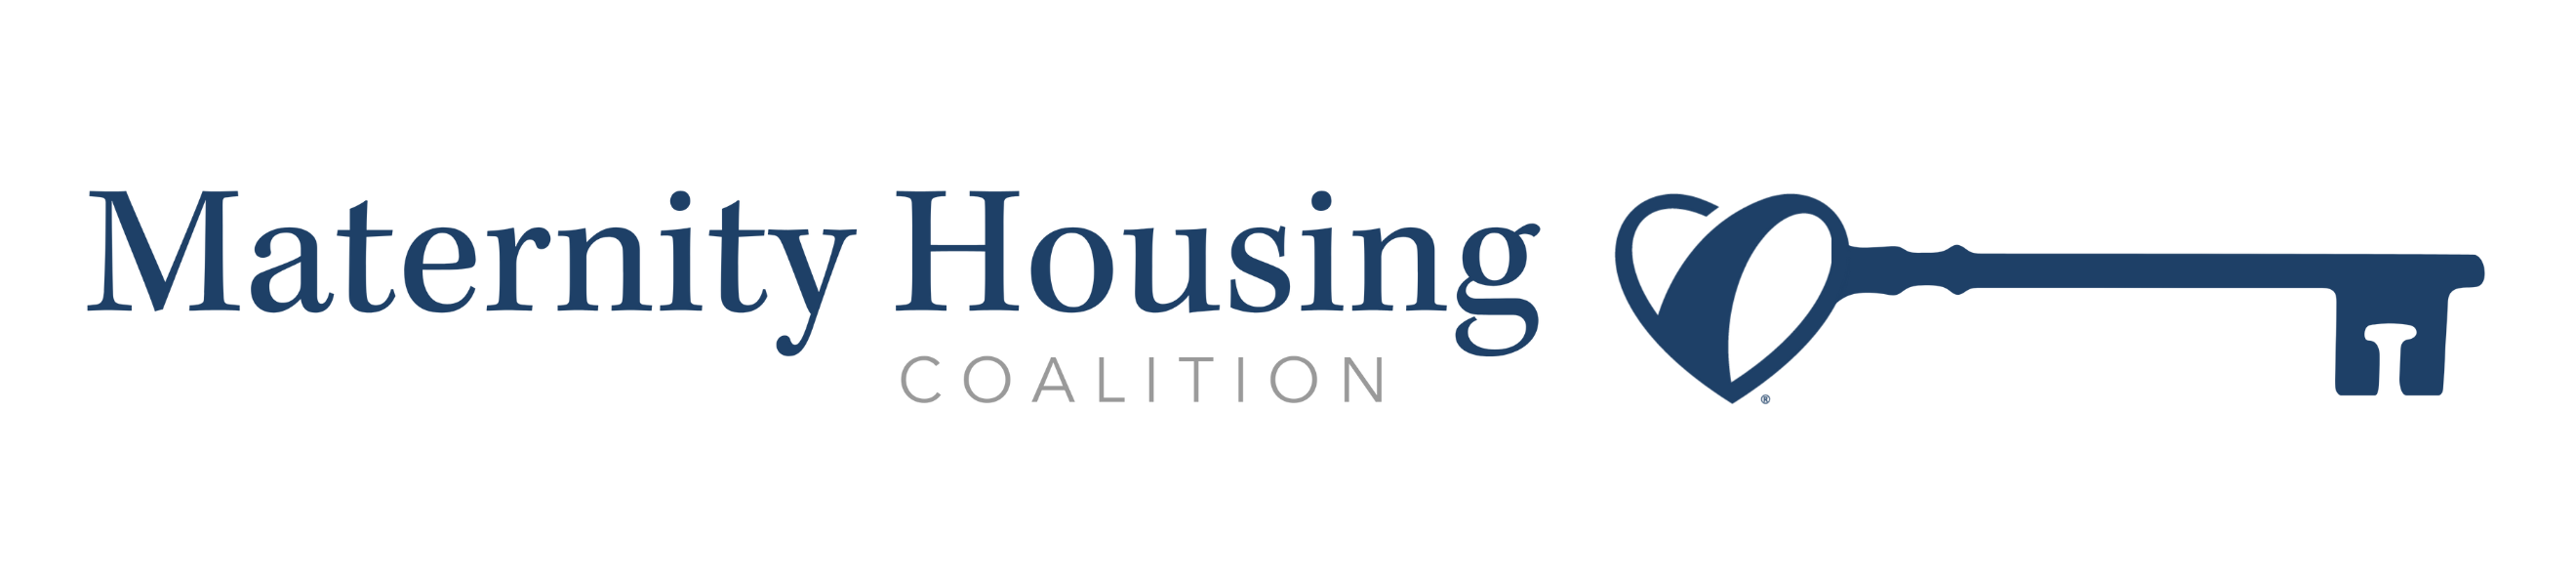 Maternity Housing Coalition